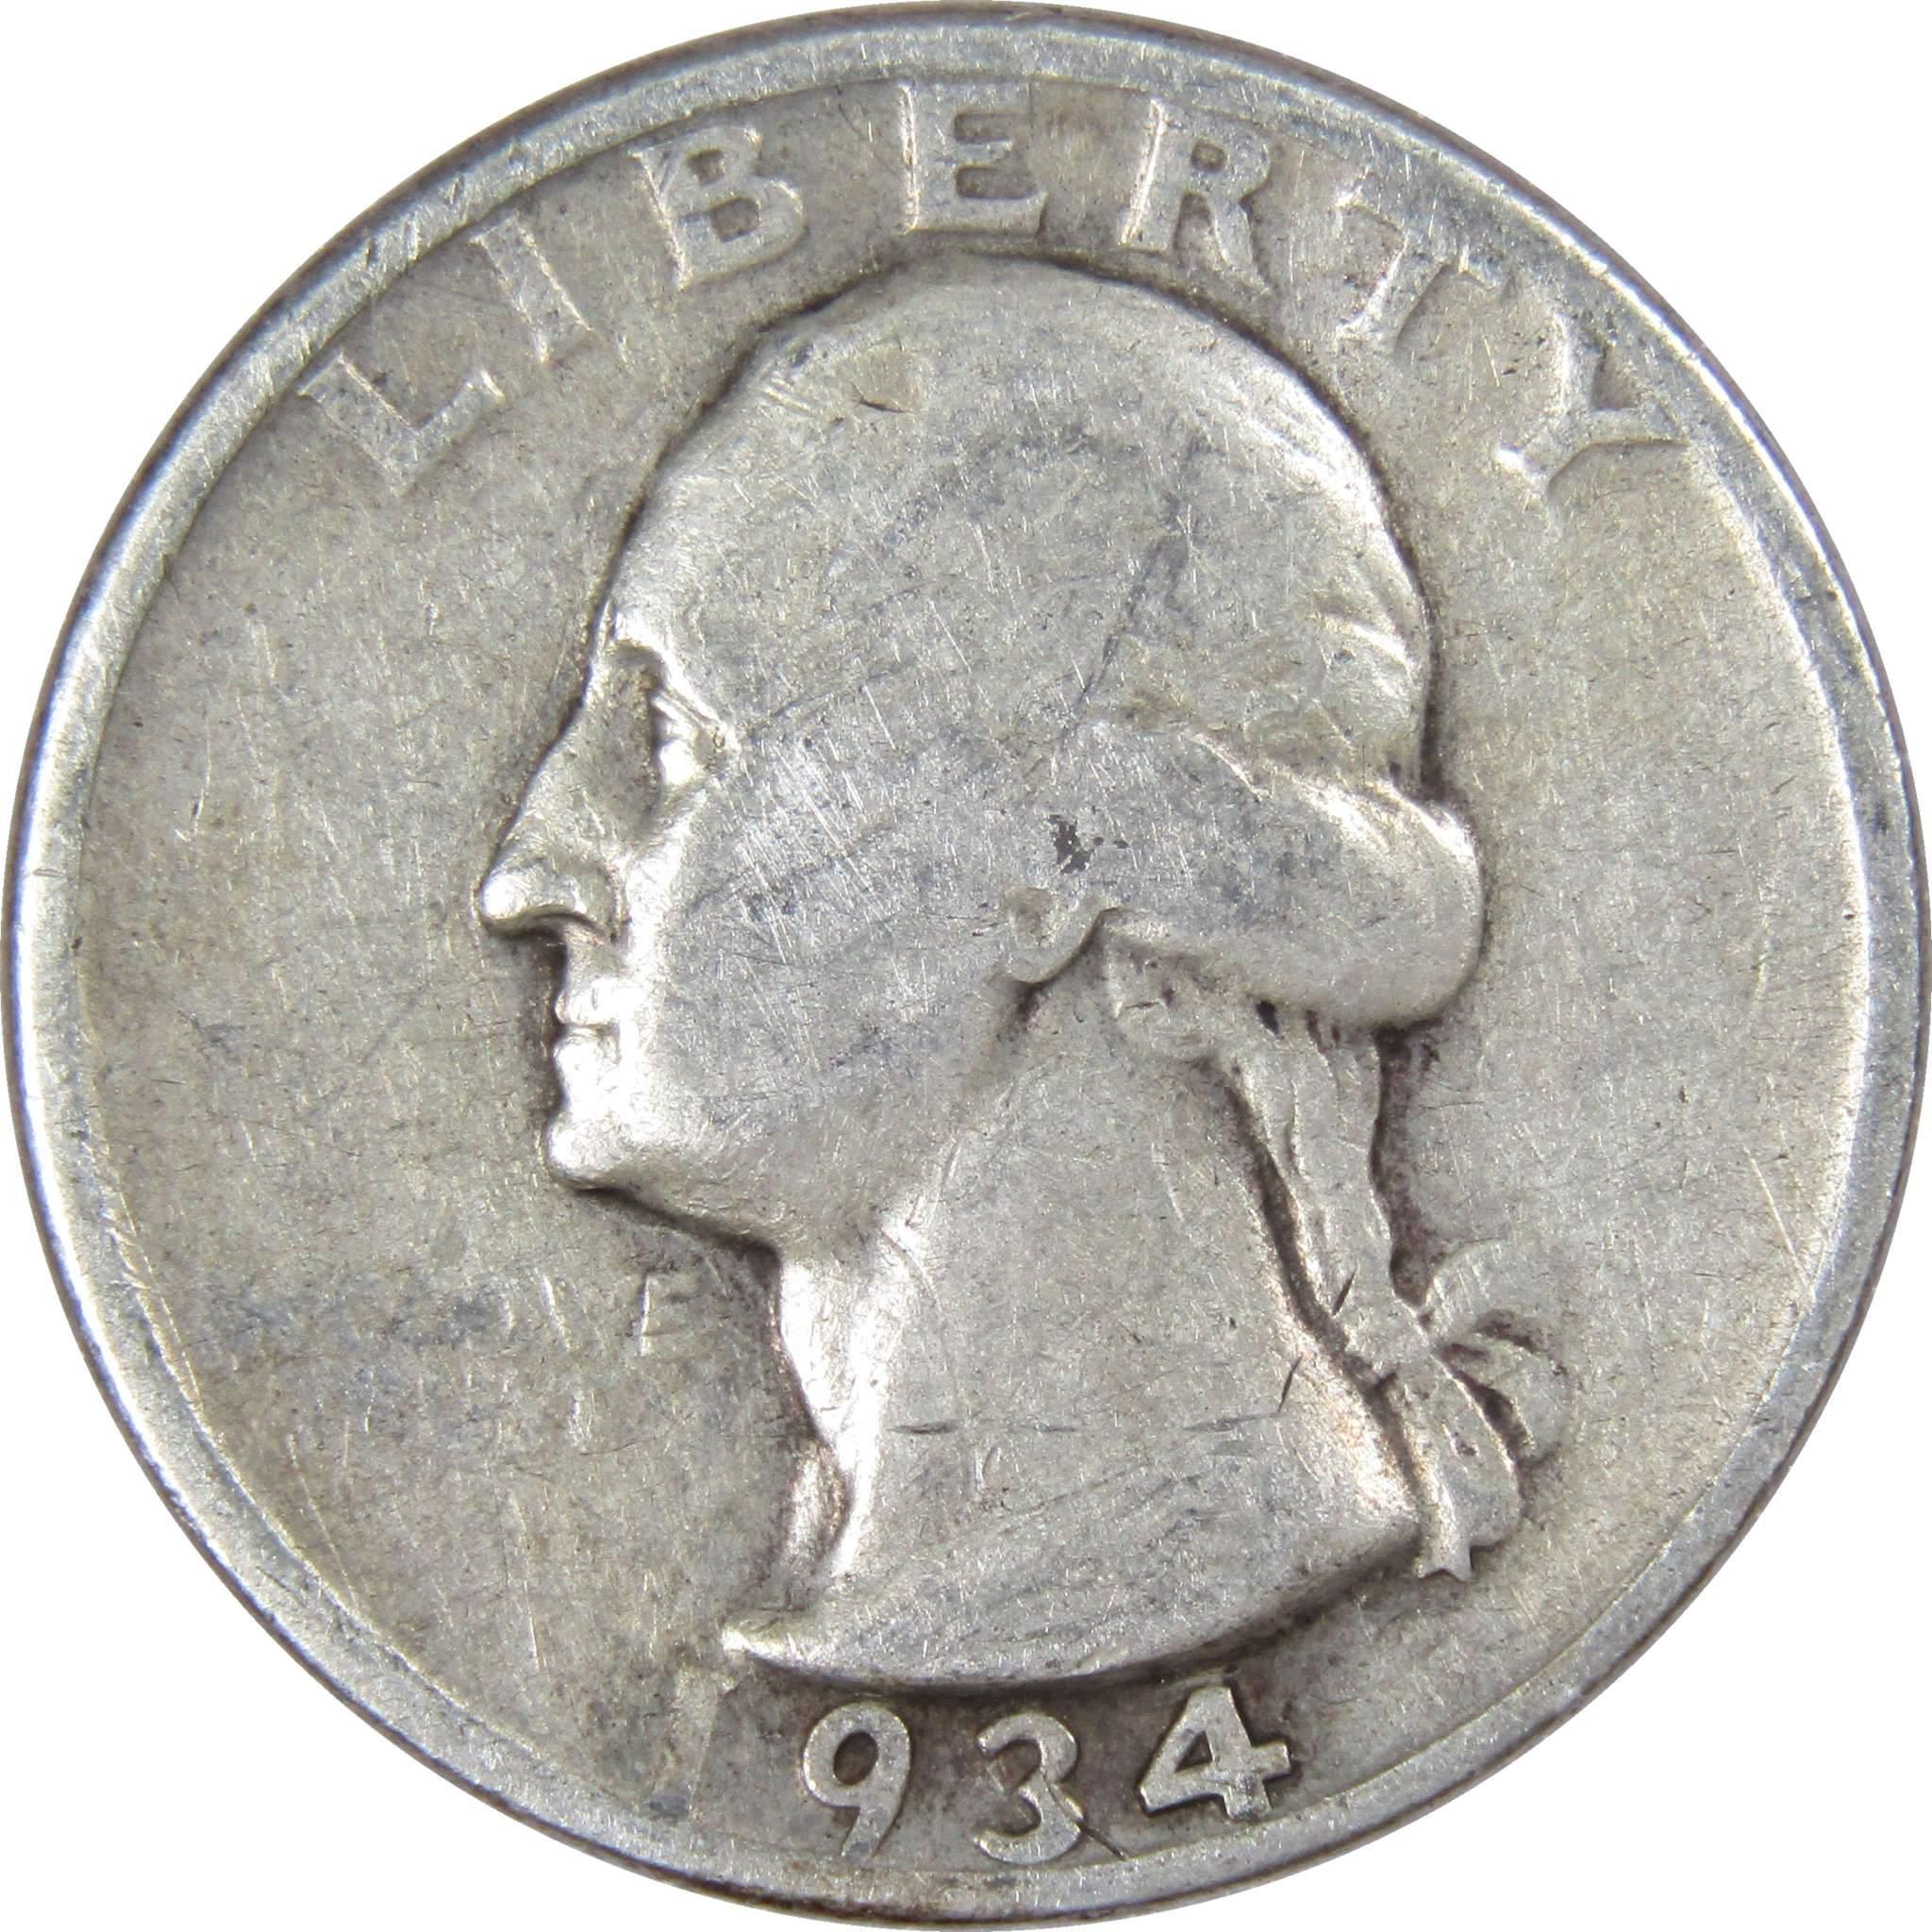 1934 Light Motto Washington Quarter AG About Good 90% Silver 25c US Coin